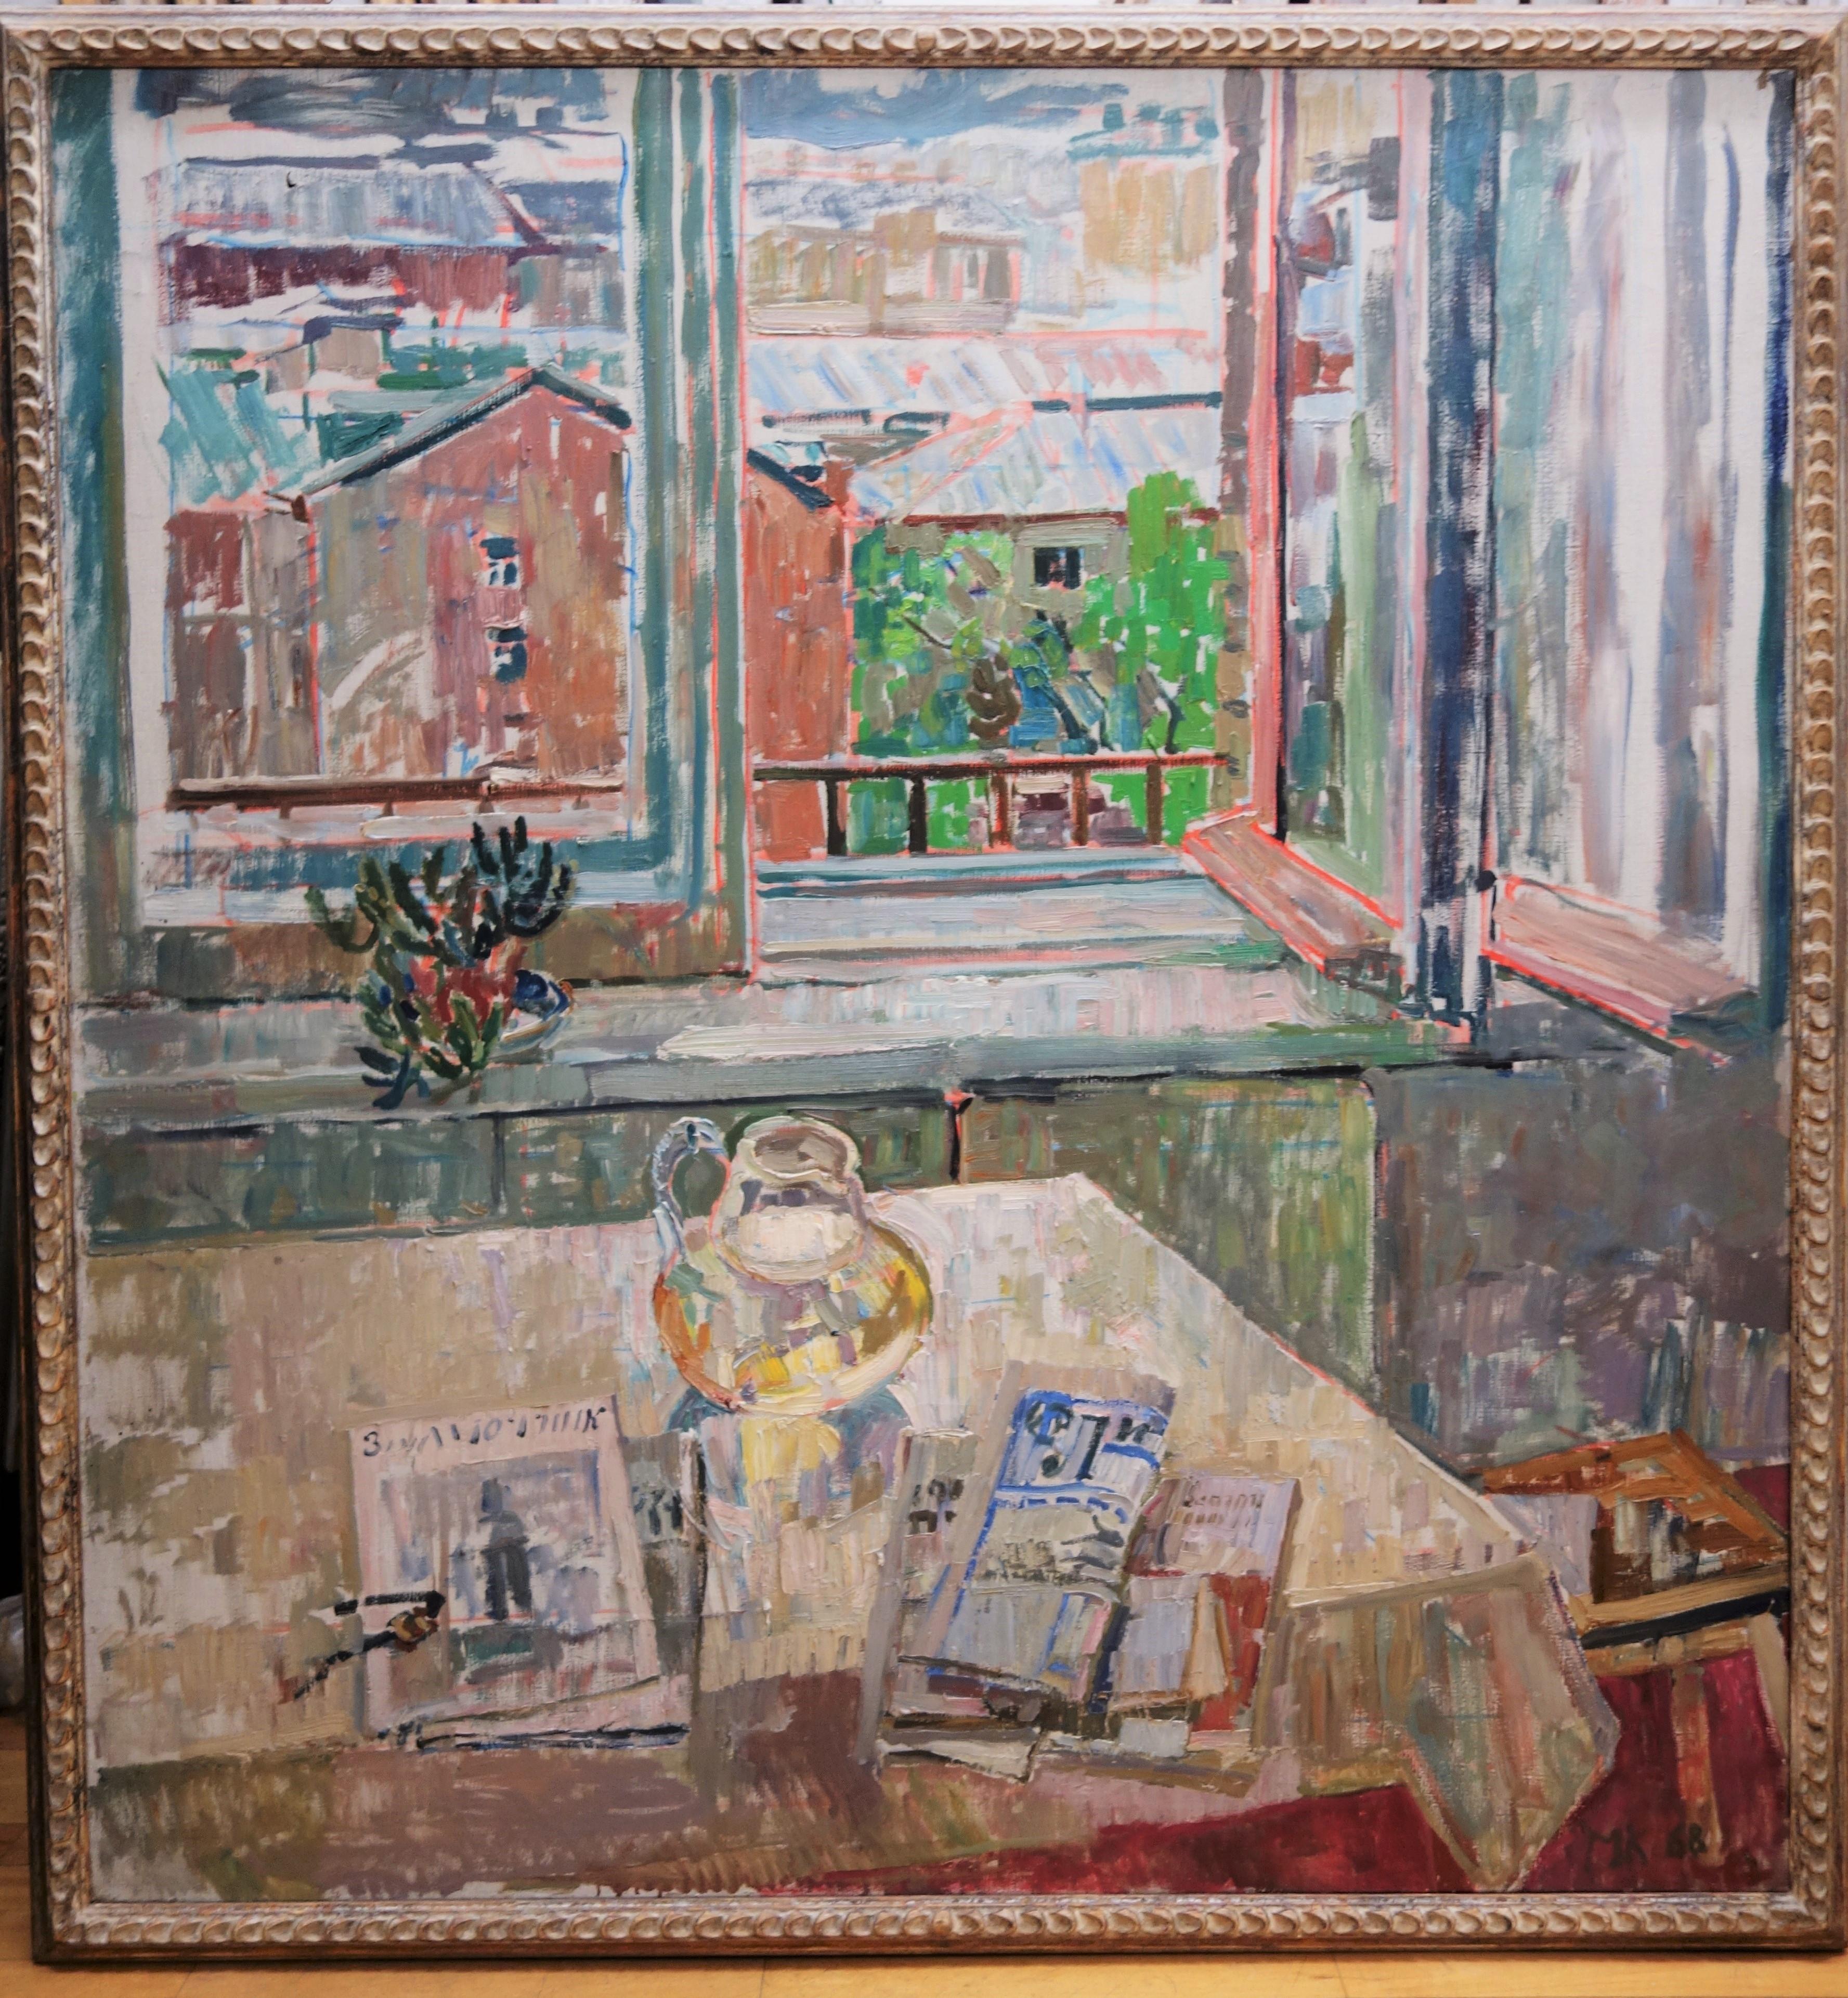 Maya KOPITZEVA Landscape Painting - "Window on the city" Oil cm. 134 x 126, 1968